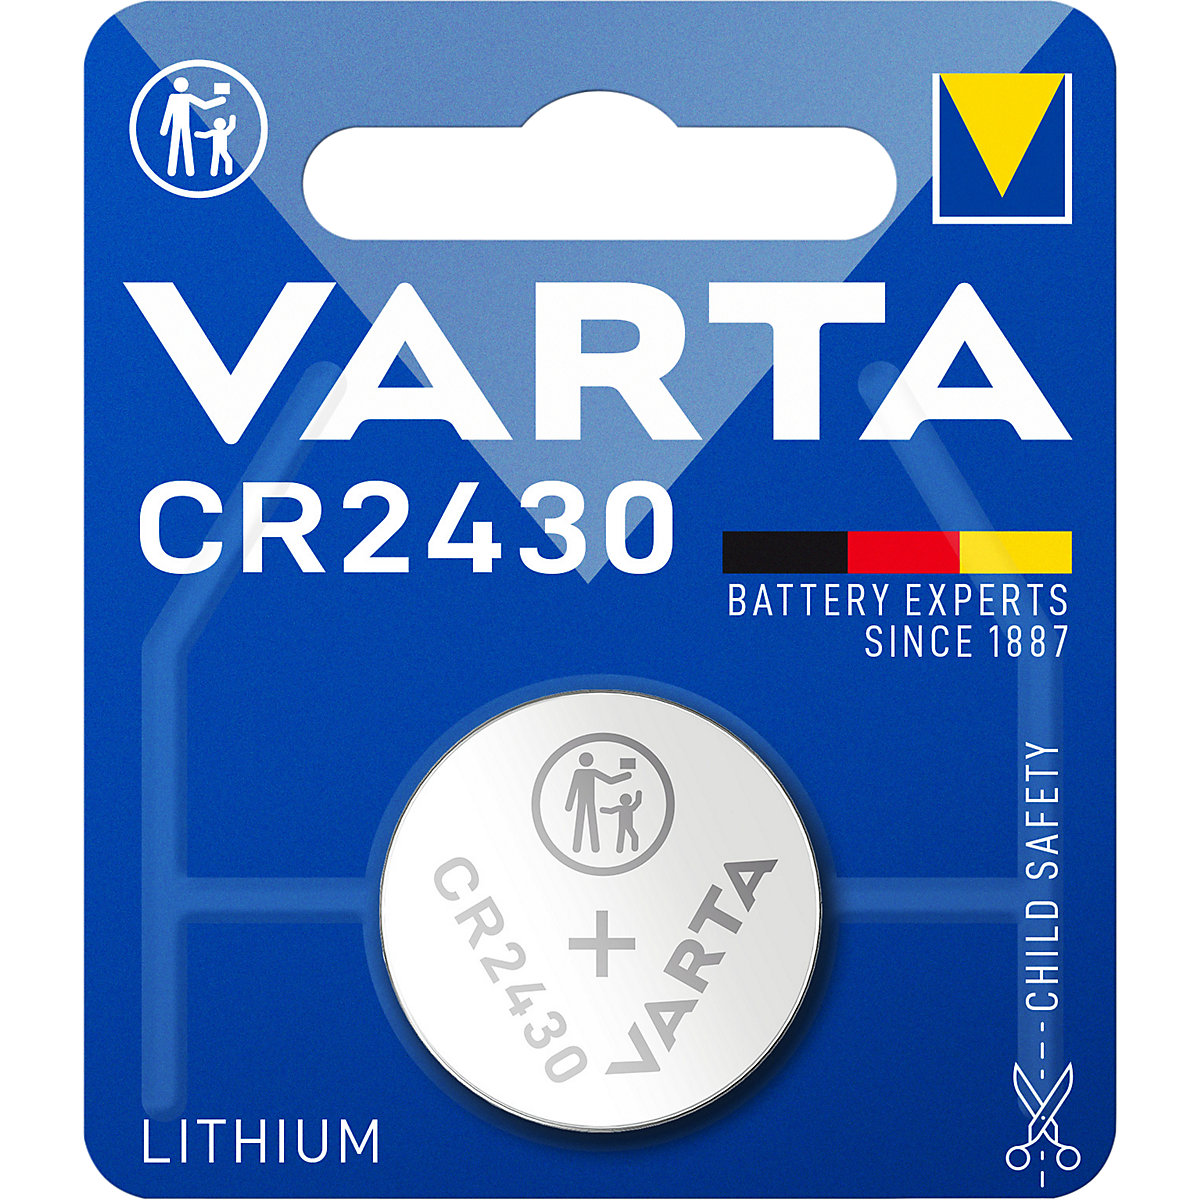 Gumbna baterija LITHIUM – VARTA